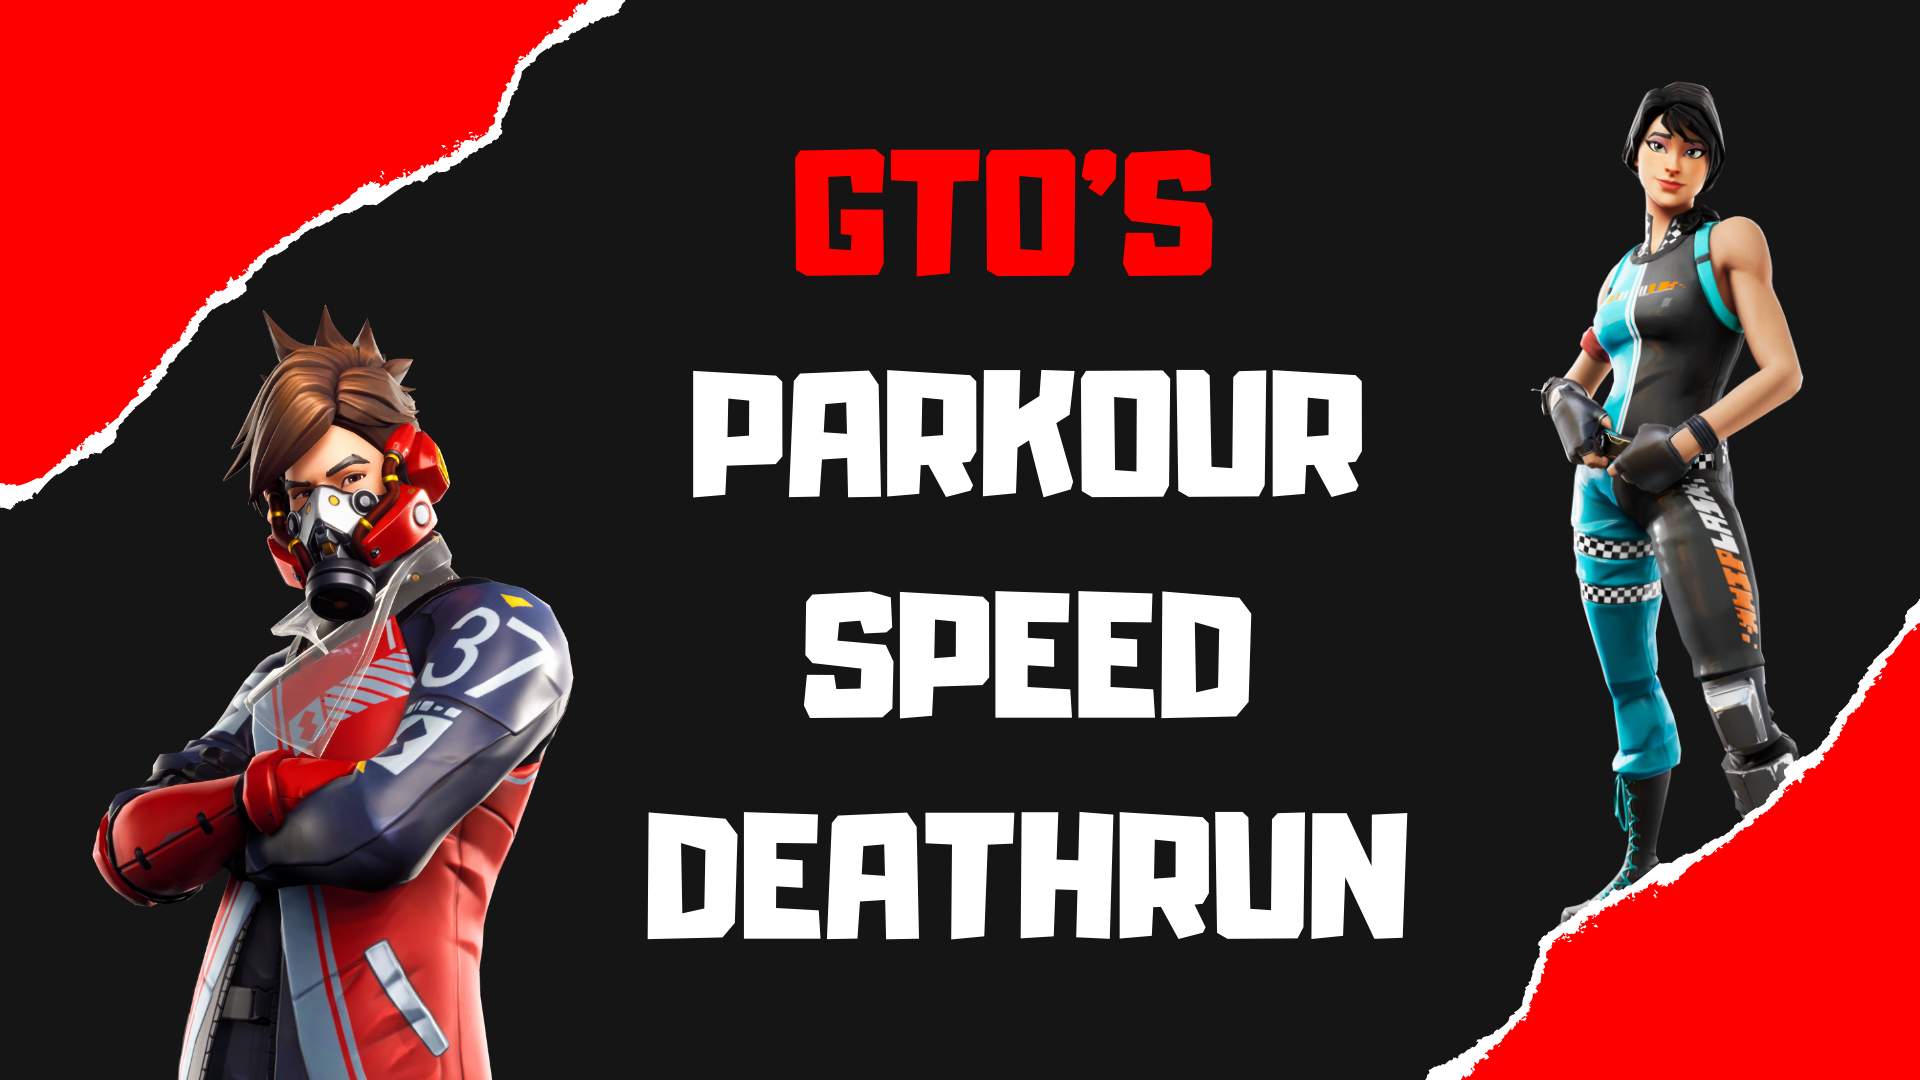 GTO'S PARKOUR SPEED DEATHRUN